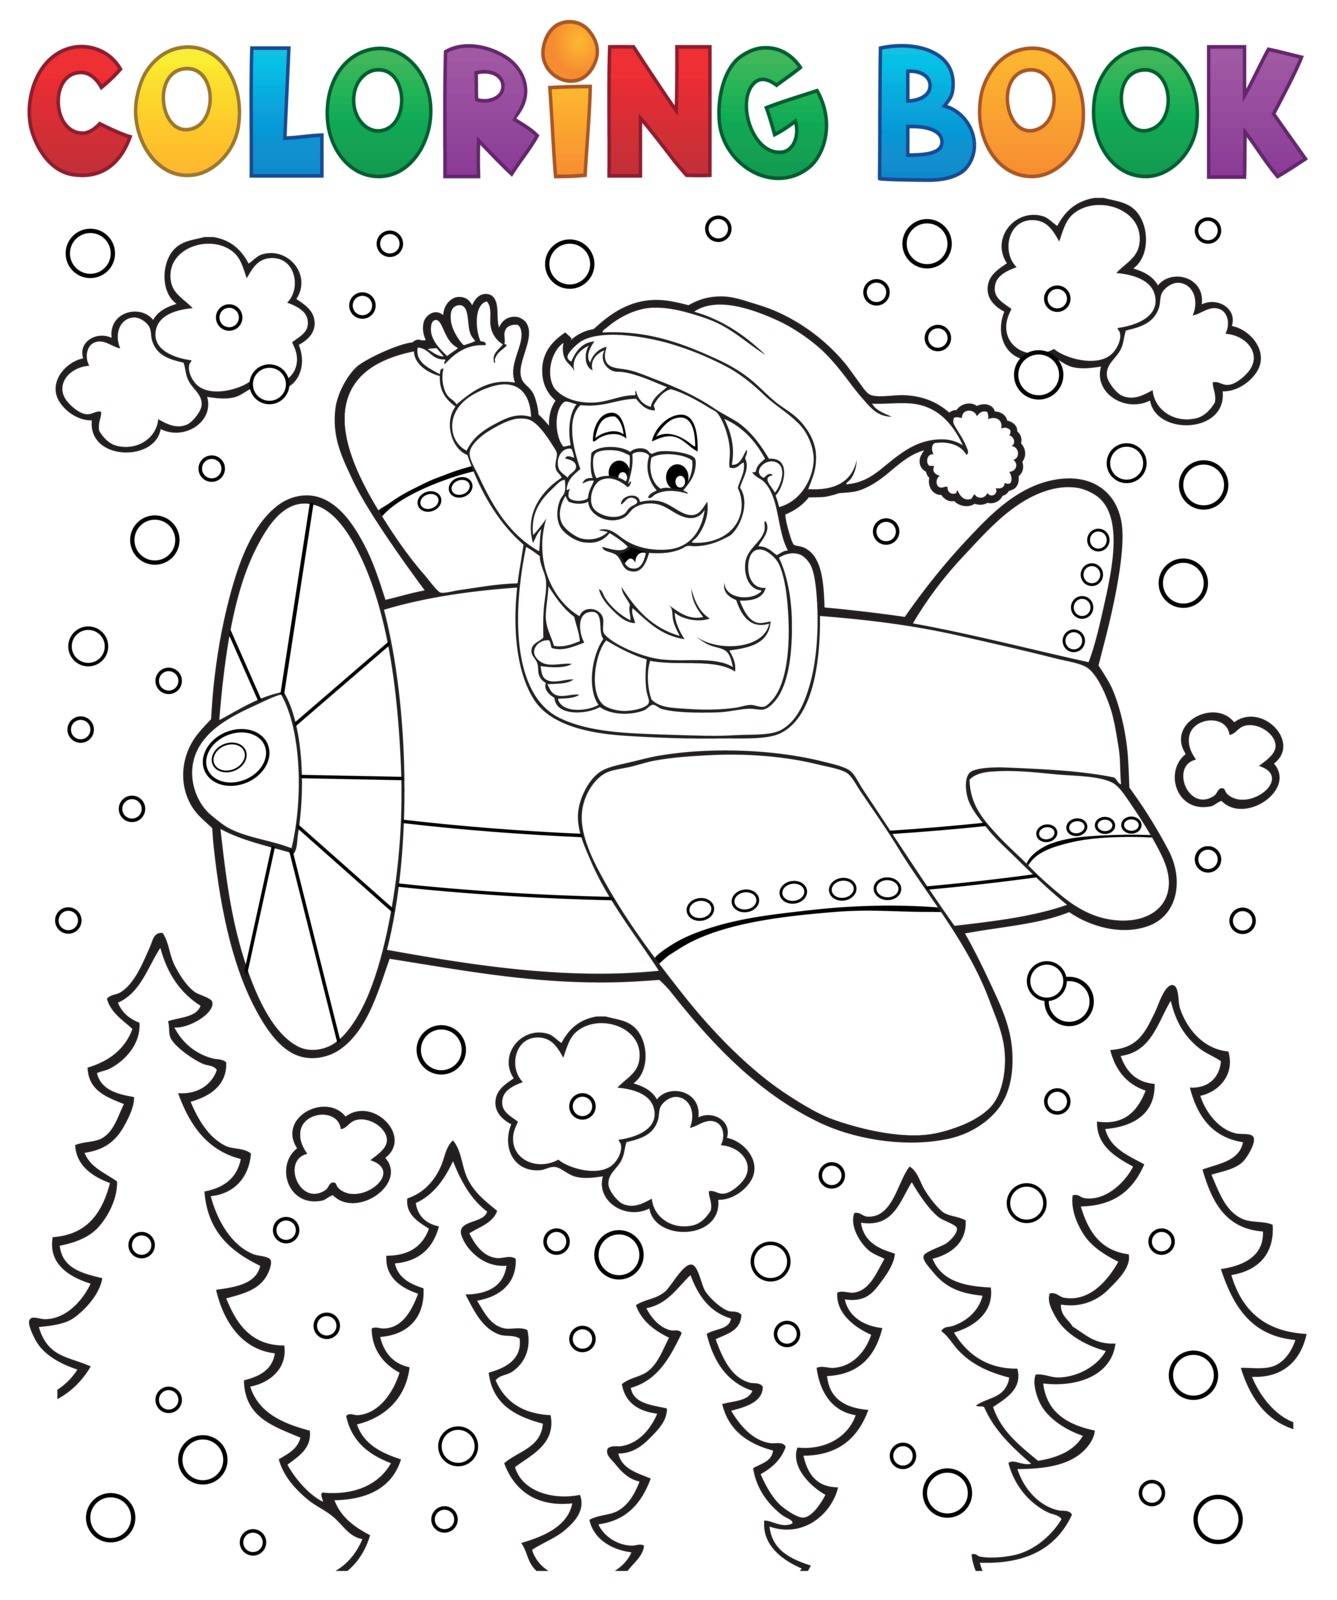 Coloring book Santa Claus in plane - eps10 vector illustration.